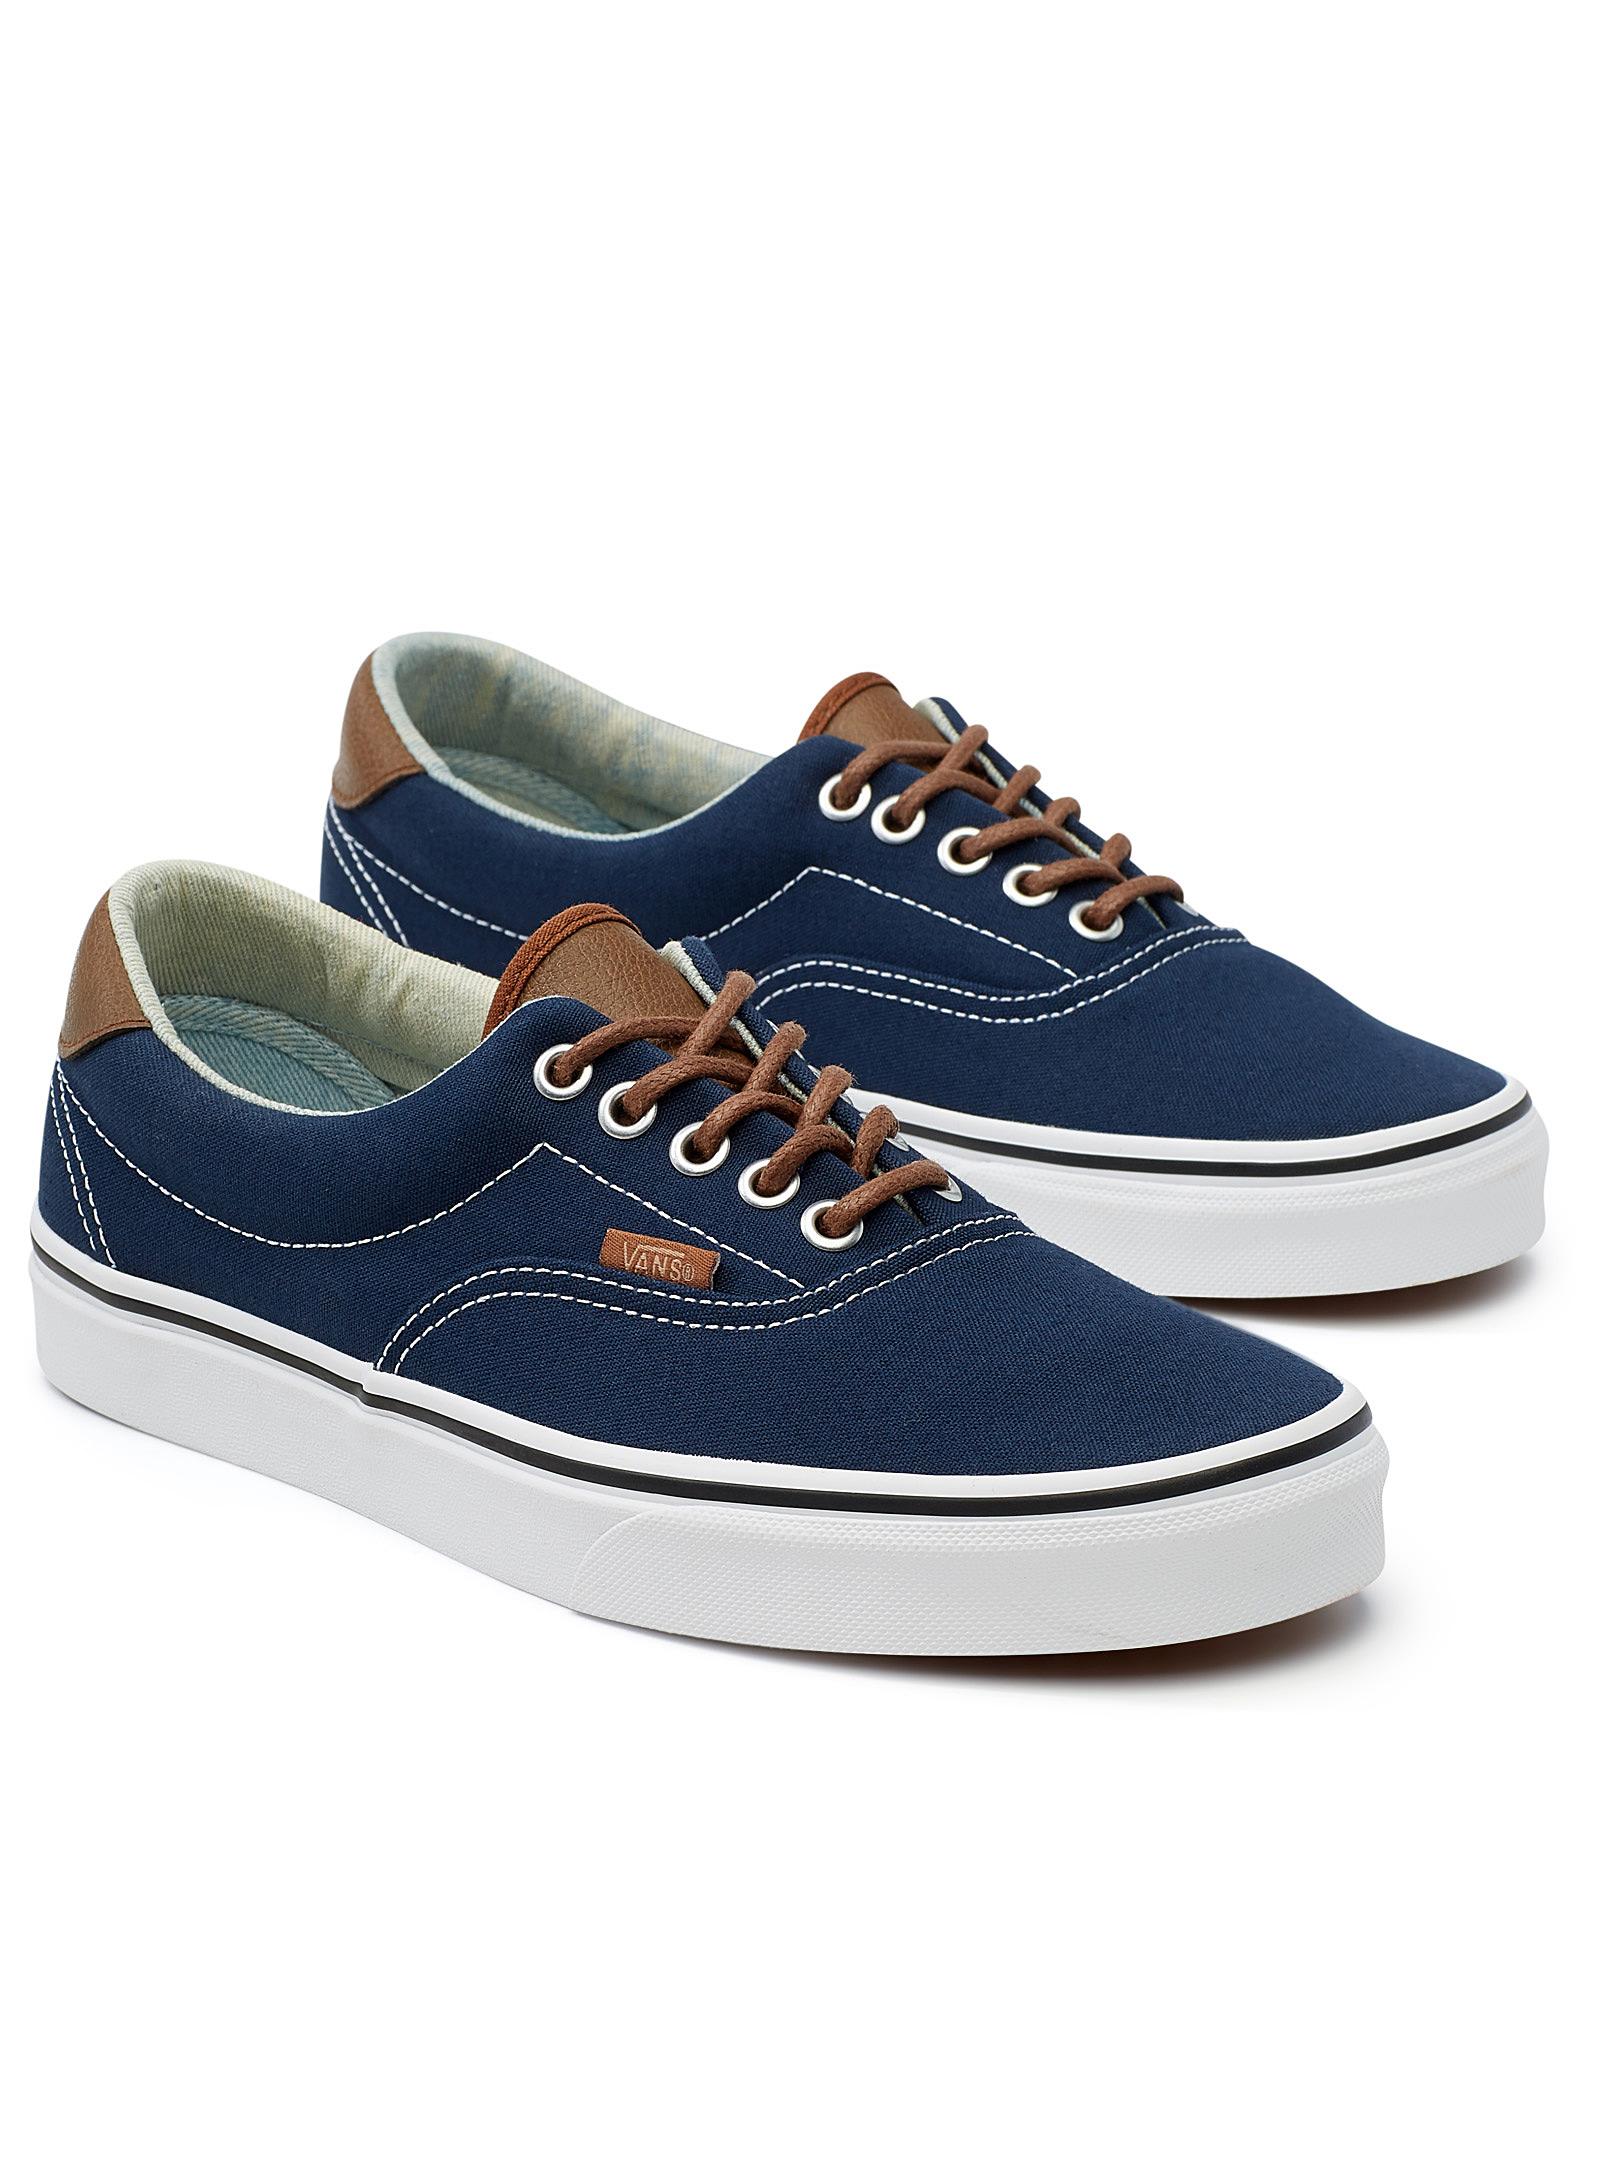 Vans Suede Era 59 Shoe in Marine Blue (Blue) for Men - Save 48% | Lyst